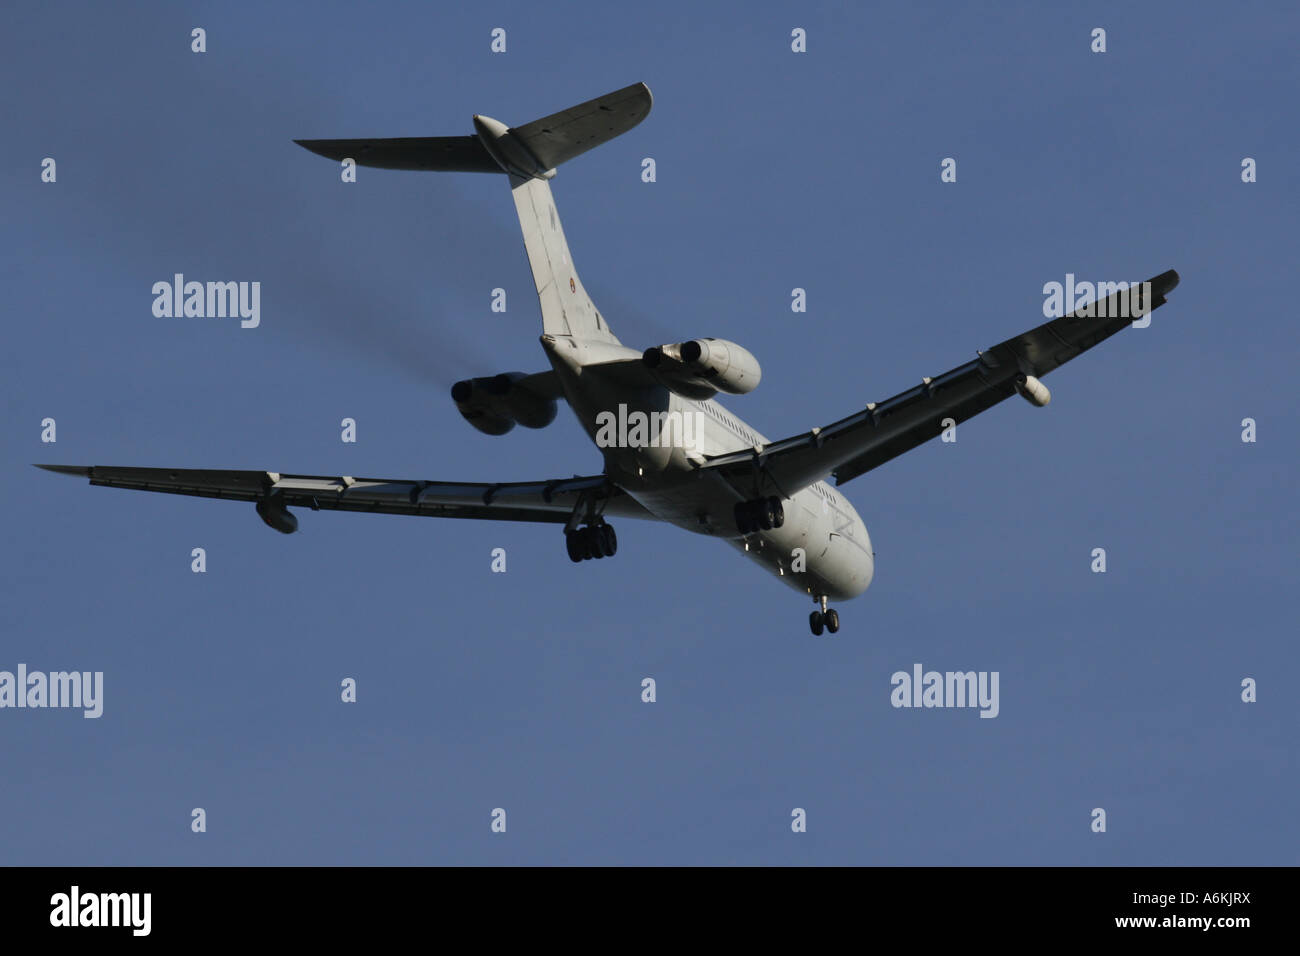 VC10 DER ROYAL AIR FORCE Stockfoto